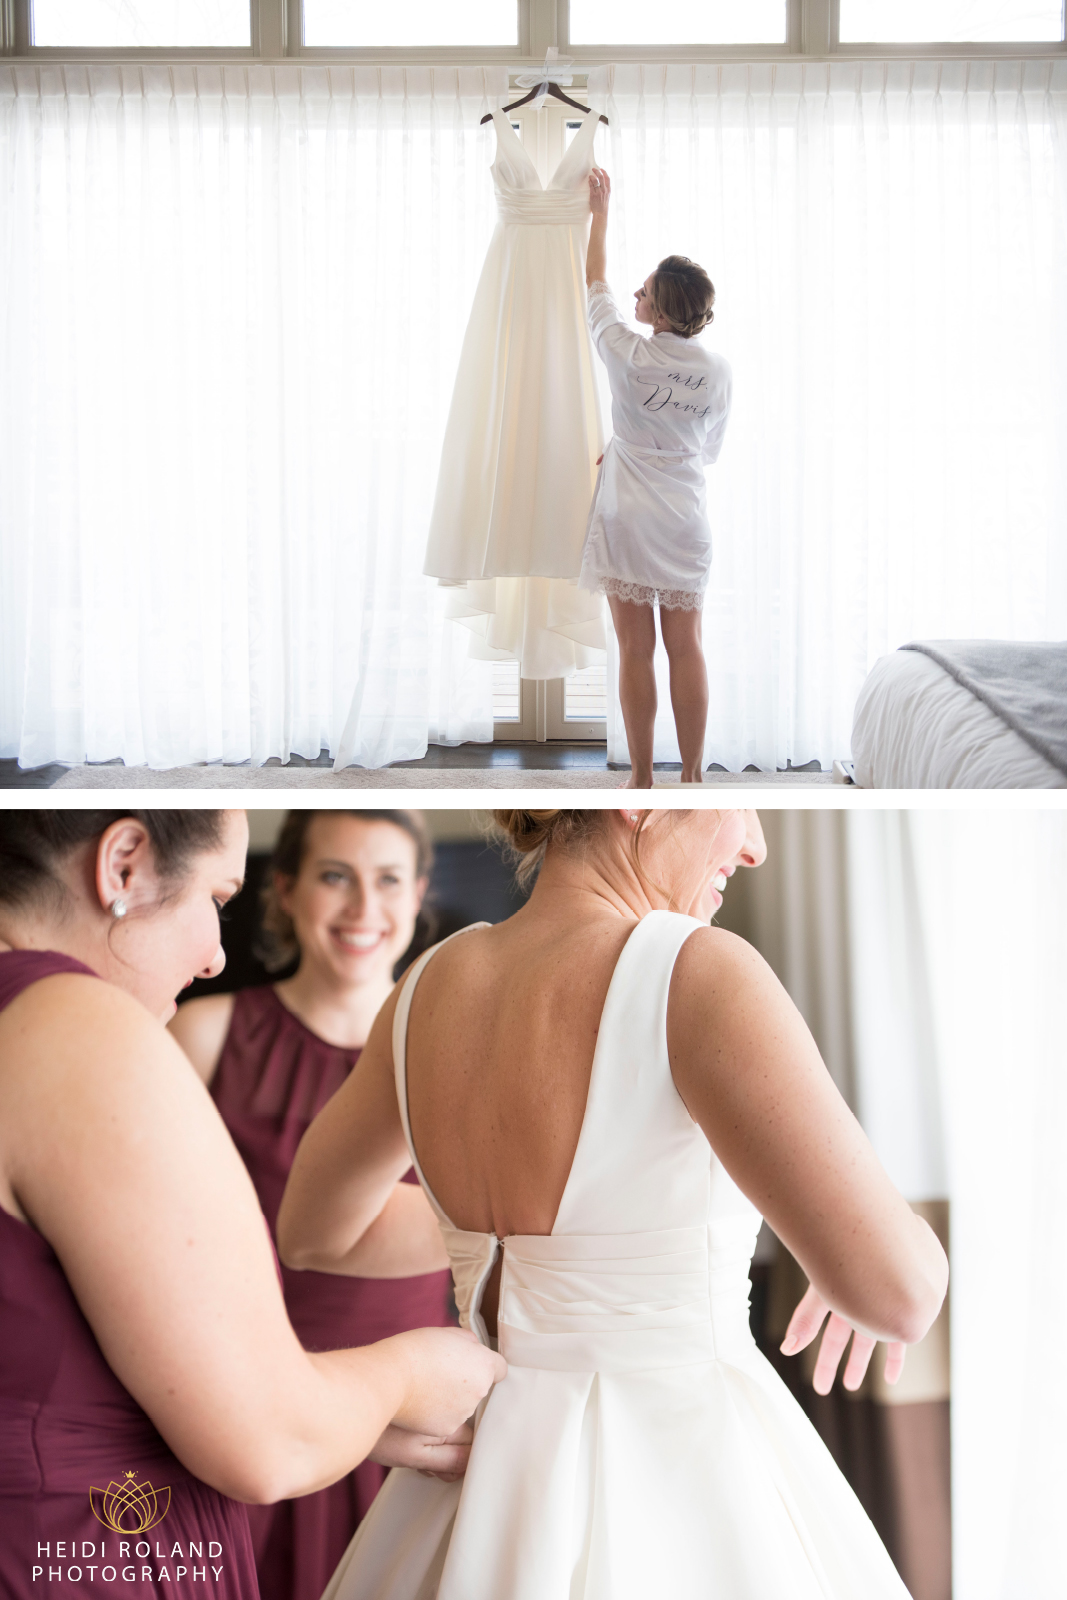 Bride in robe stepping into wedding dress